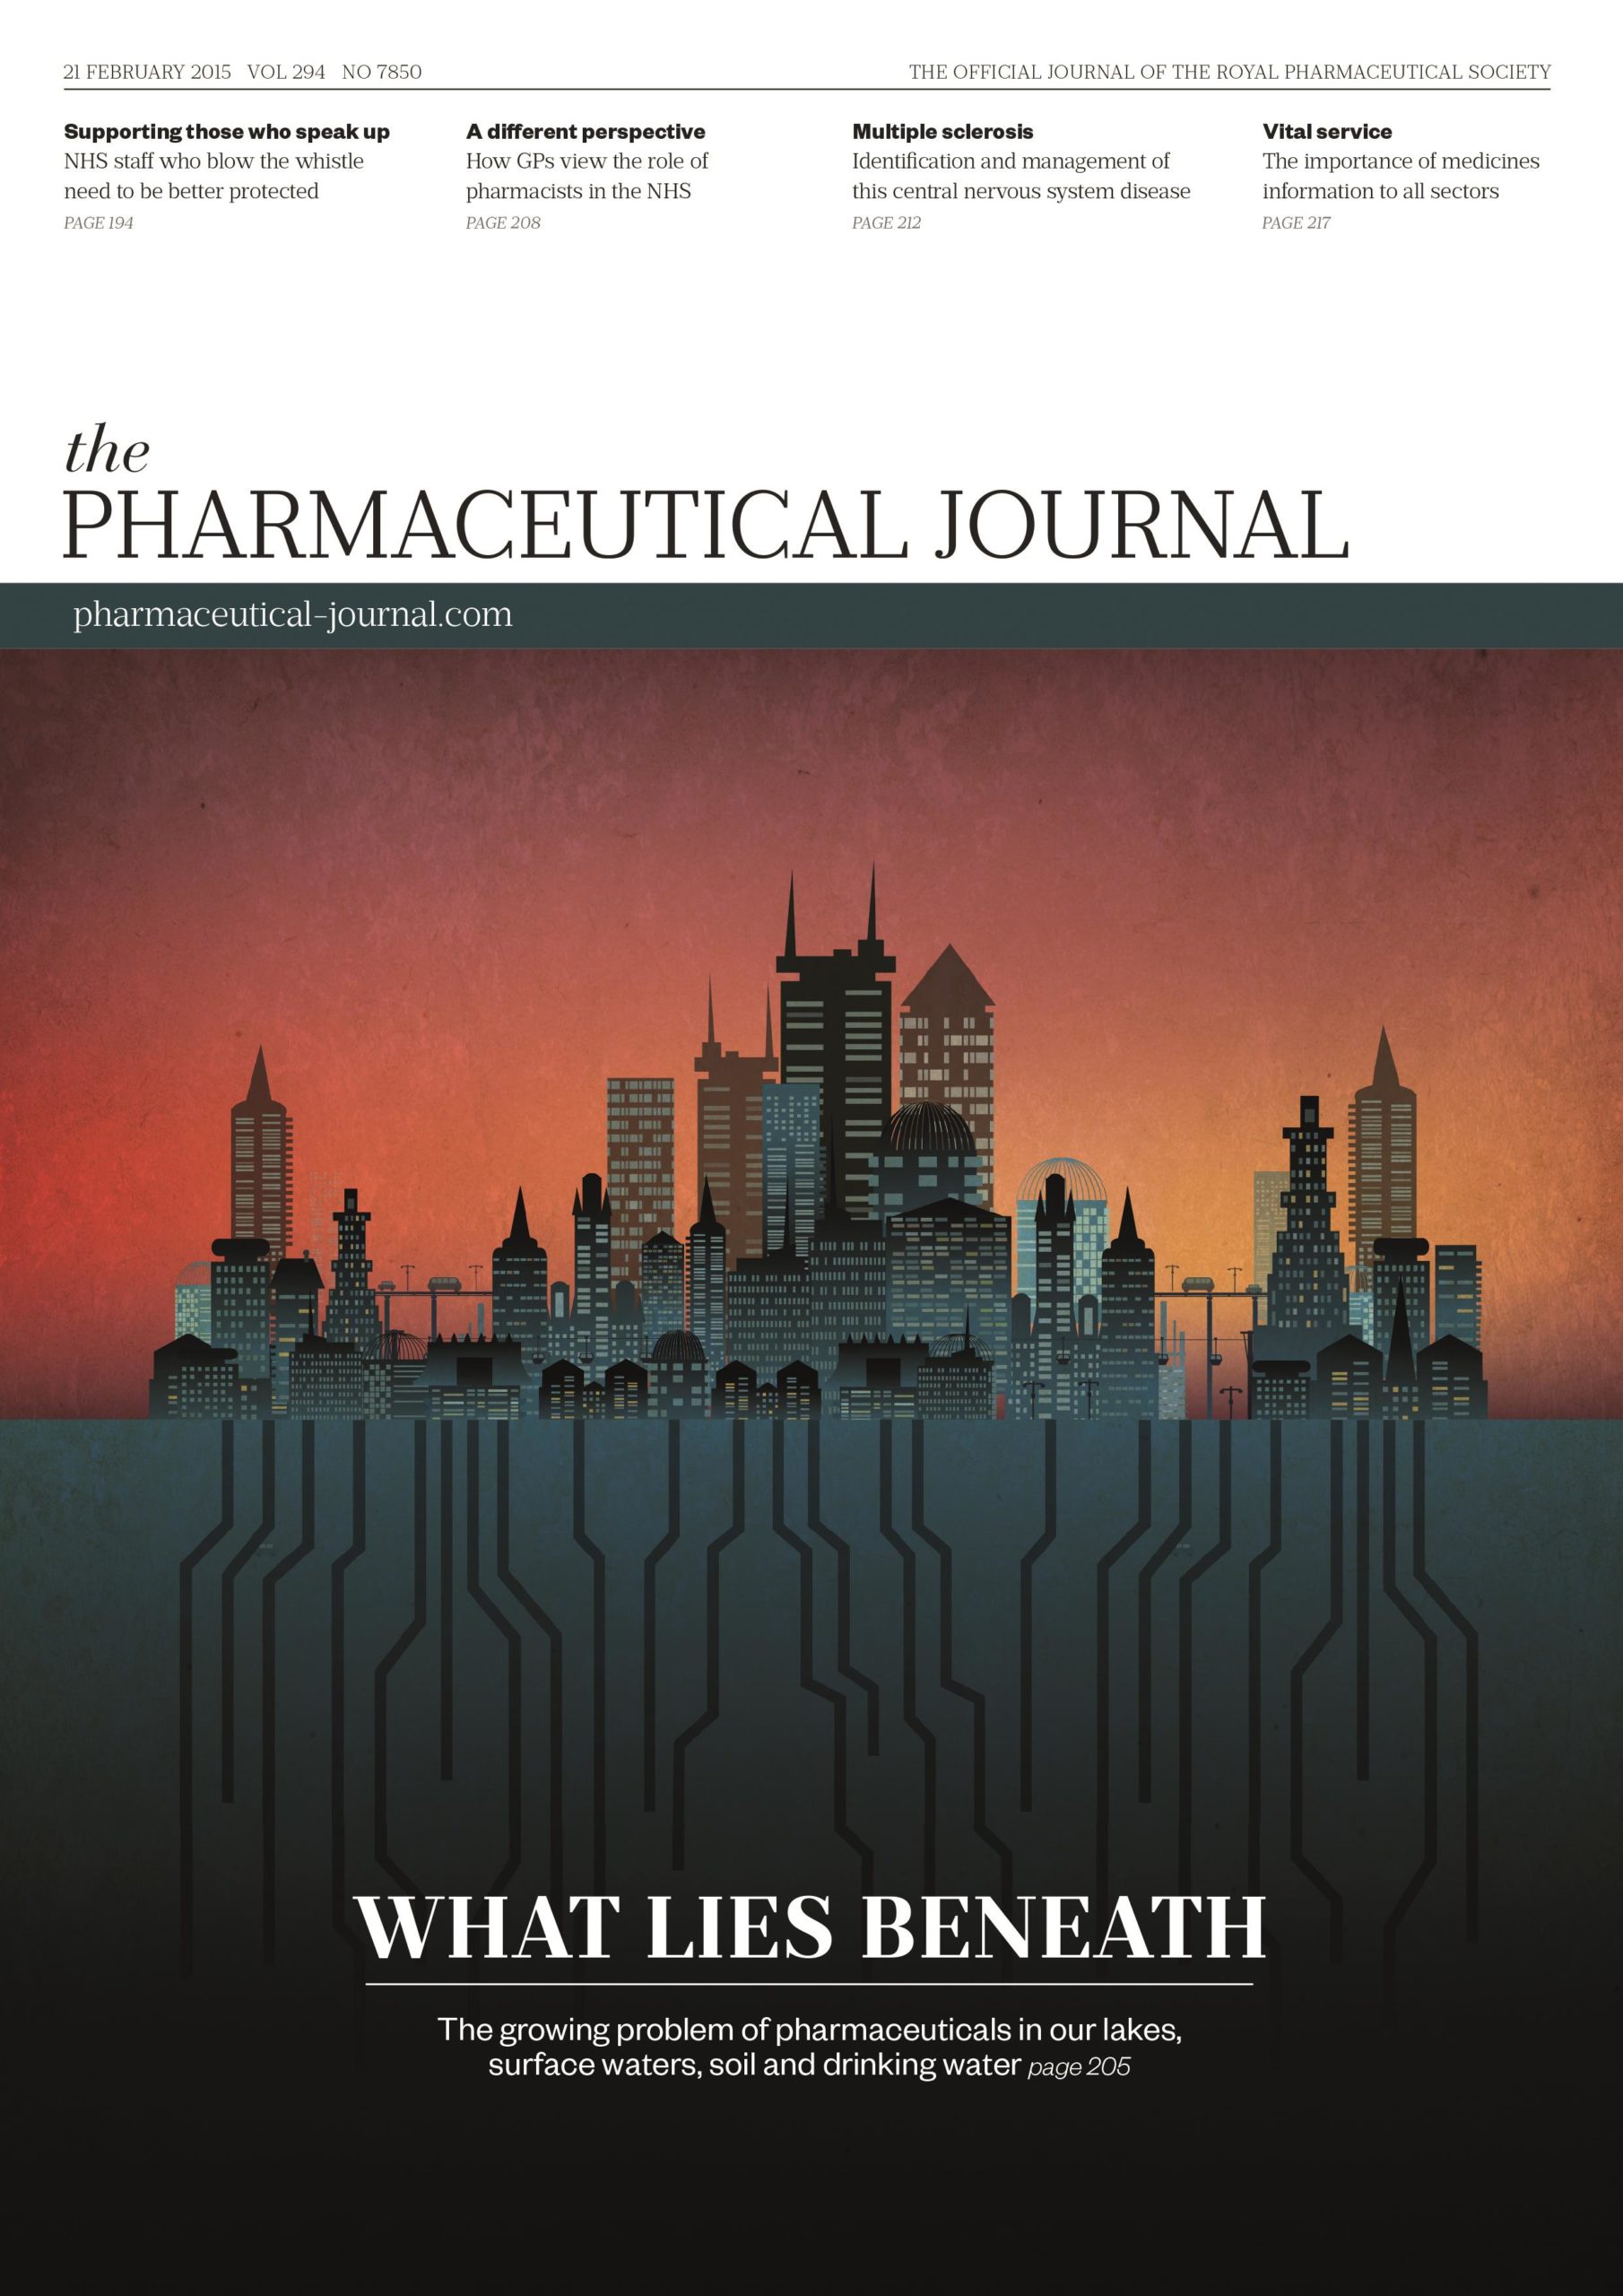 Publication issue cover for PJ, 21 February 2015, Vol 294, No 7850